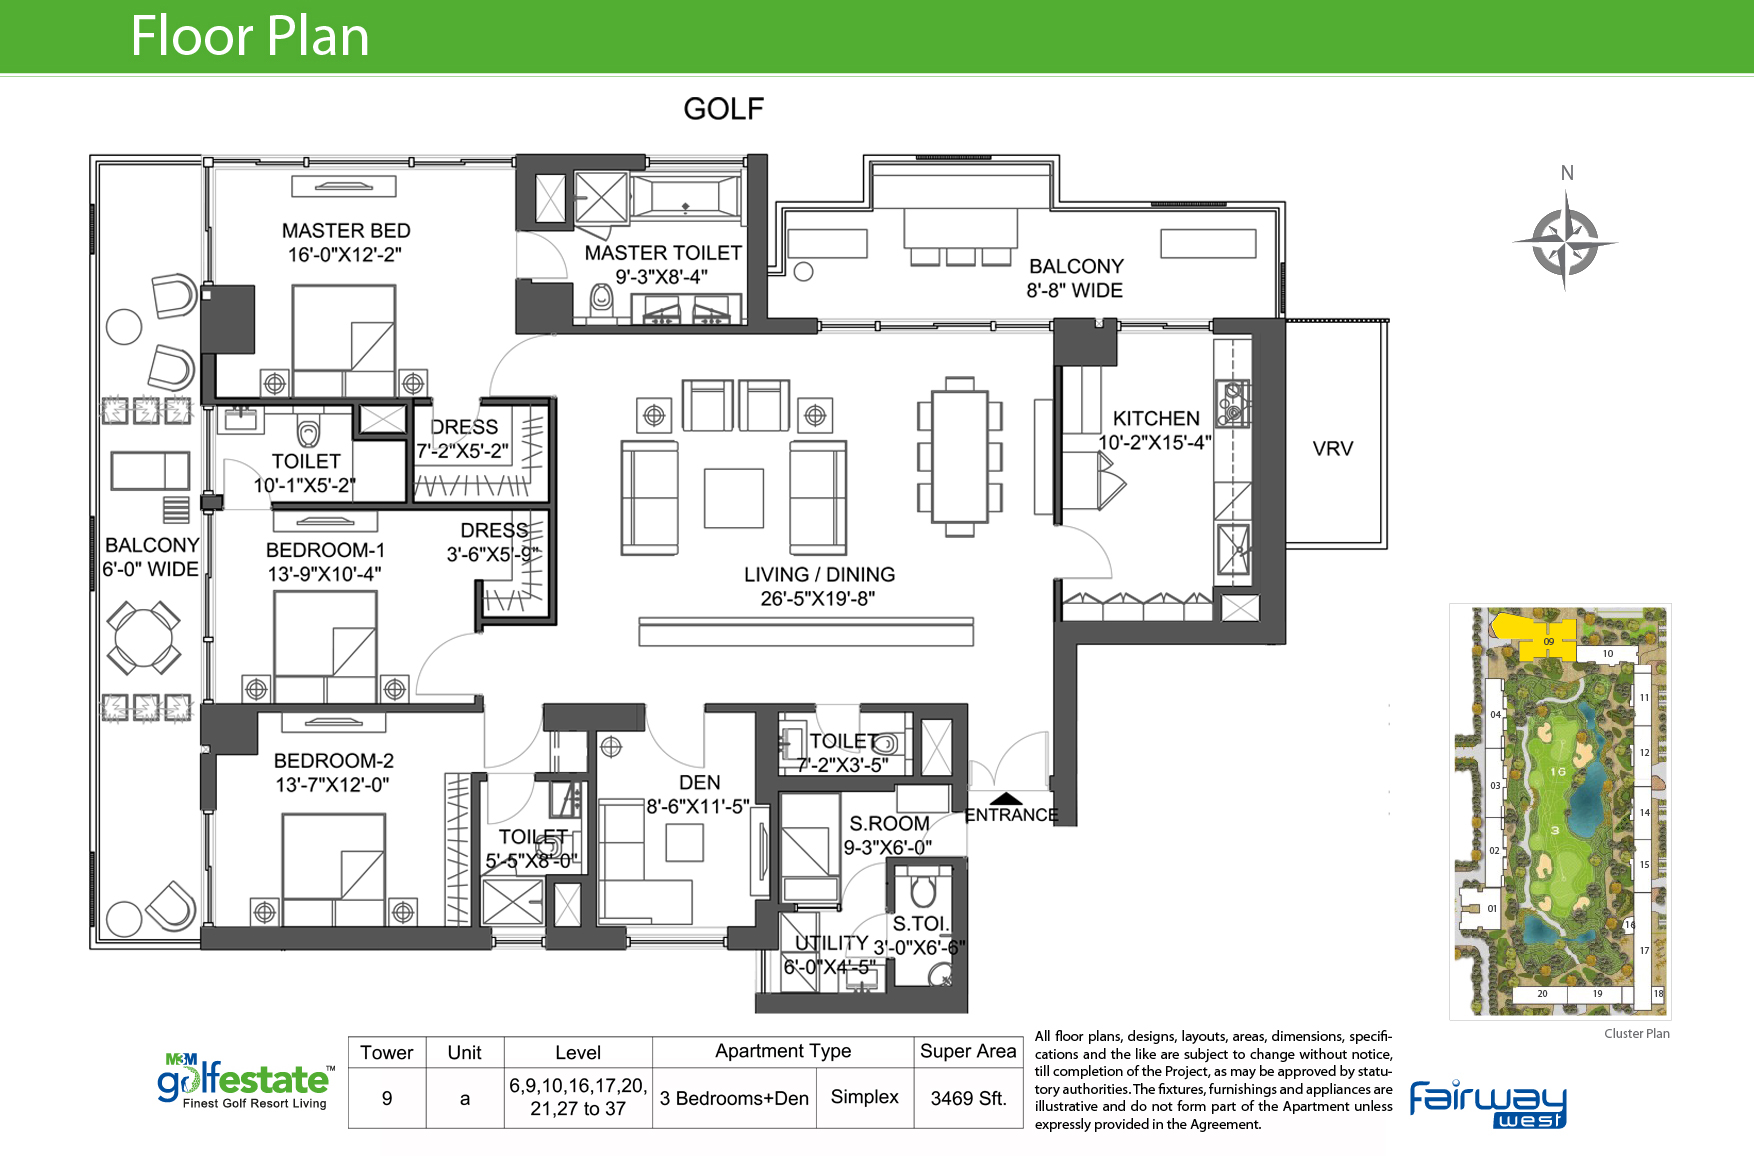 Floor plan of M3M Golf estate Fairway West 3888 Sqft